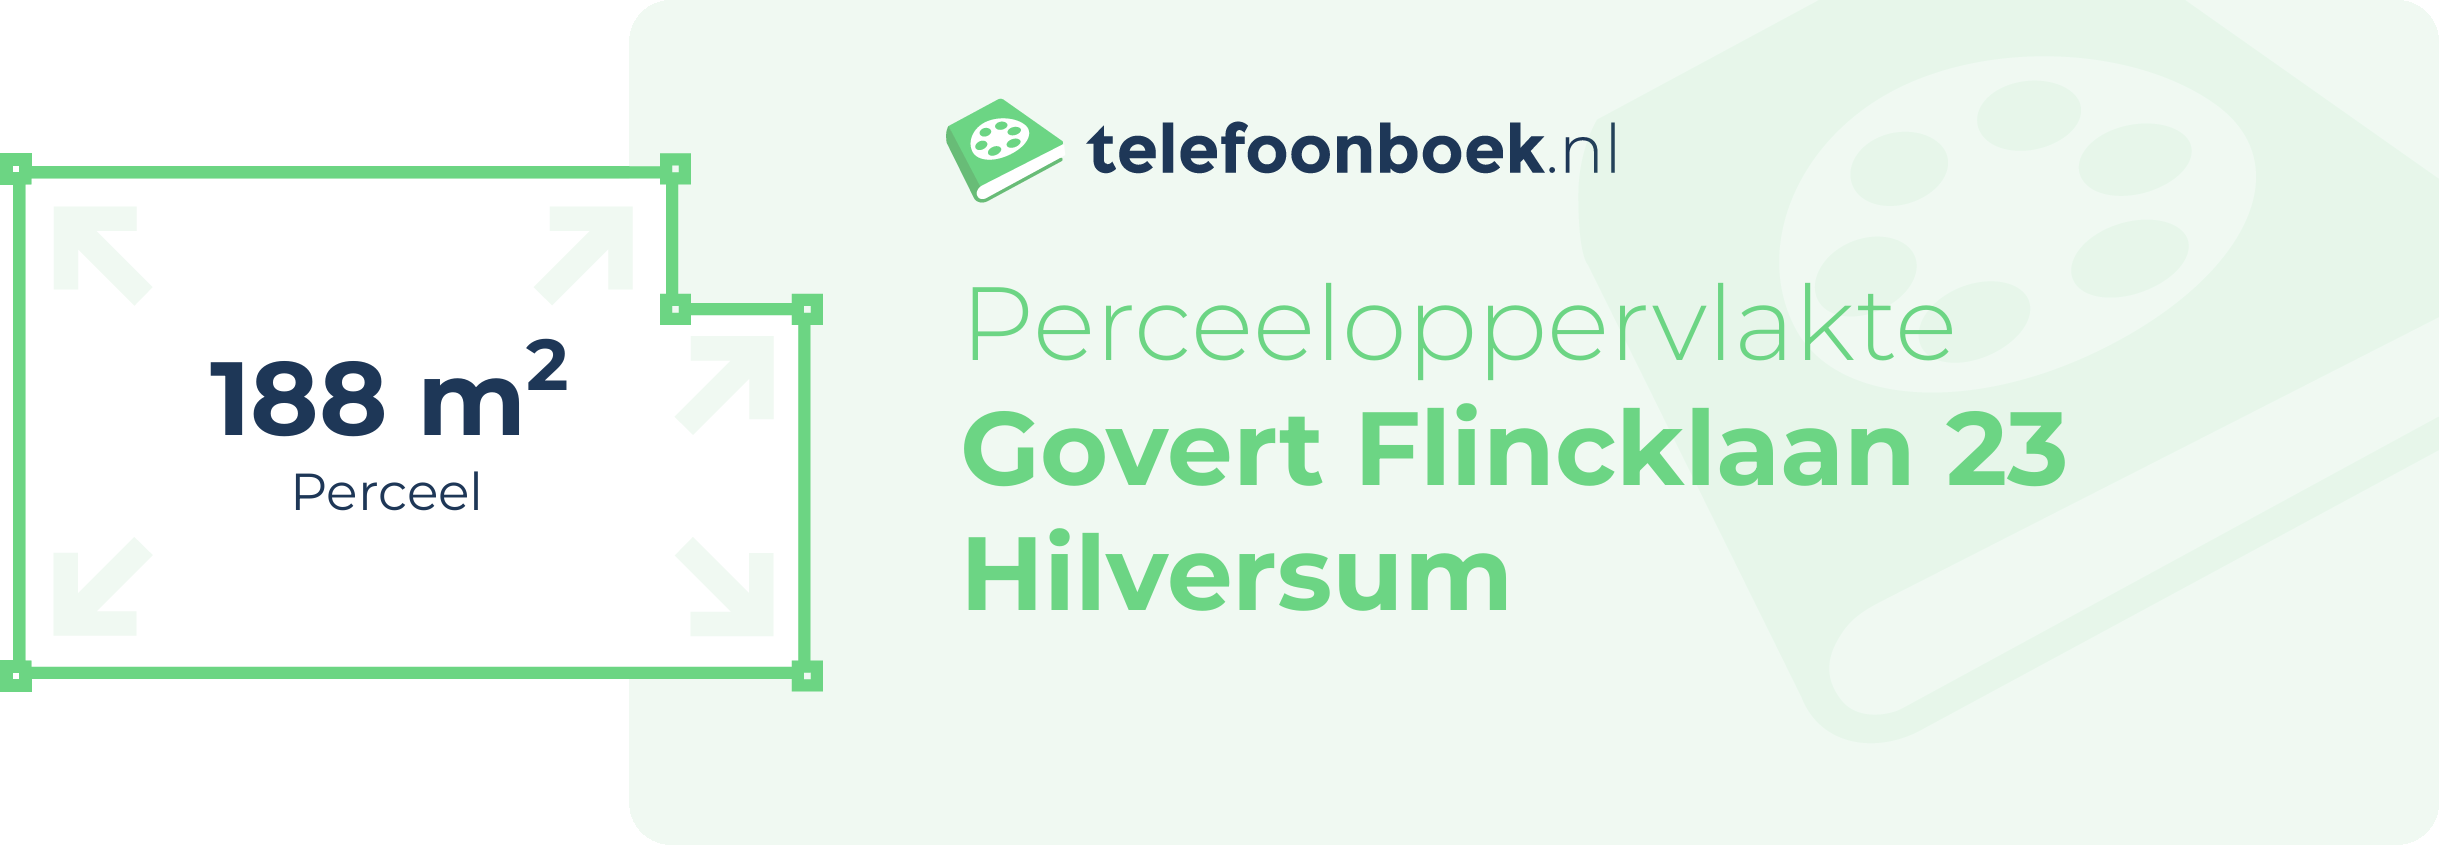 Perceeloppervlakte Govert Flincklaan 23 Hilversum